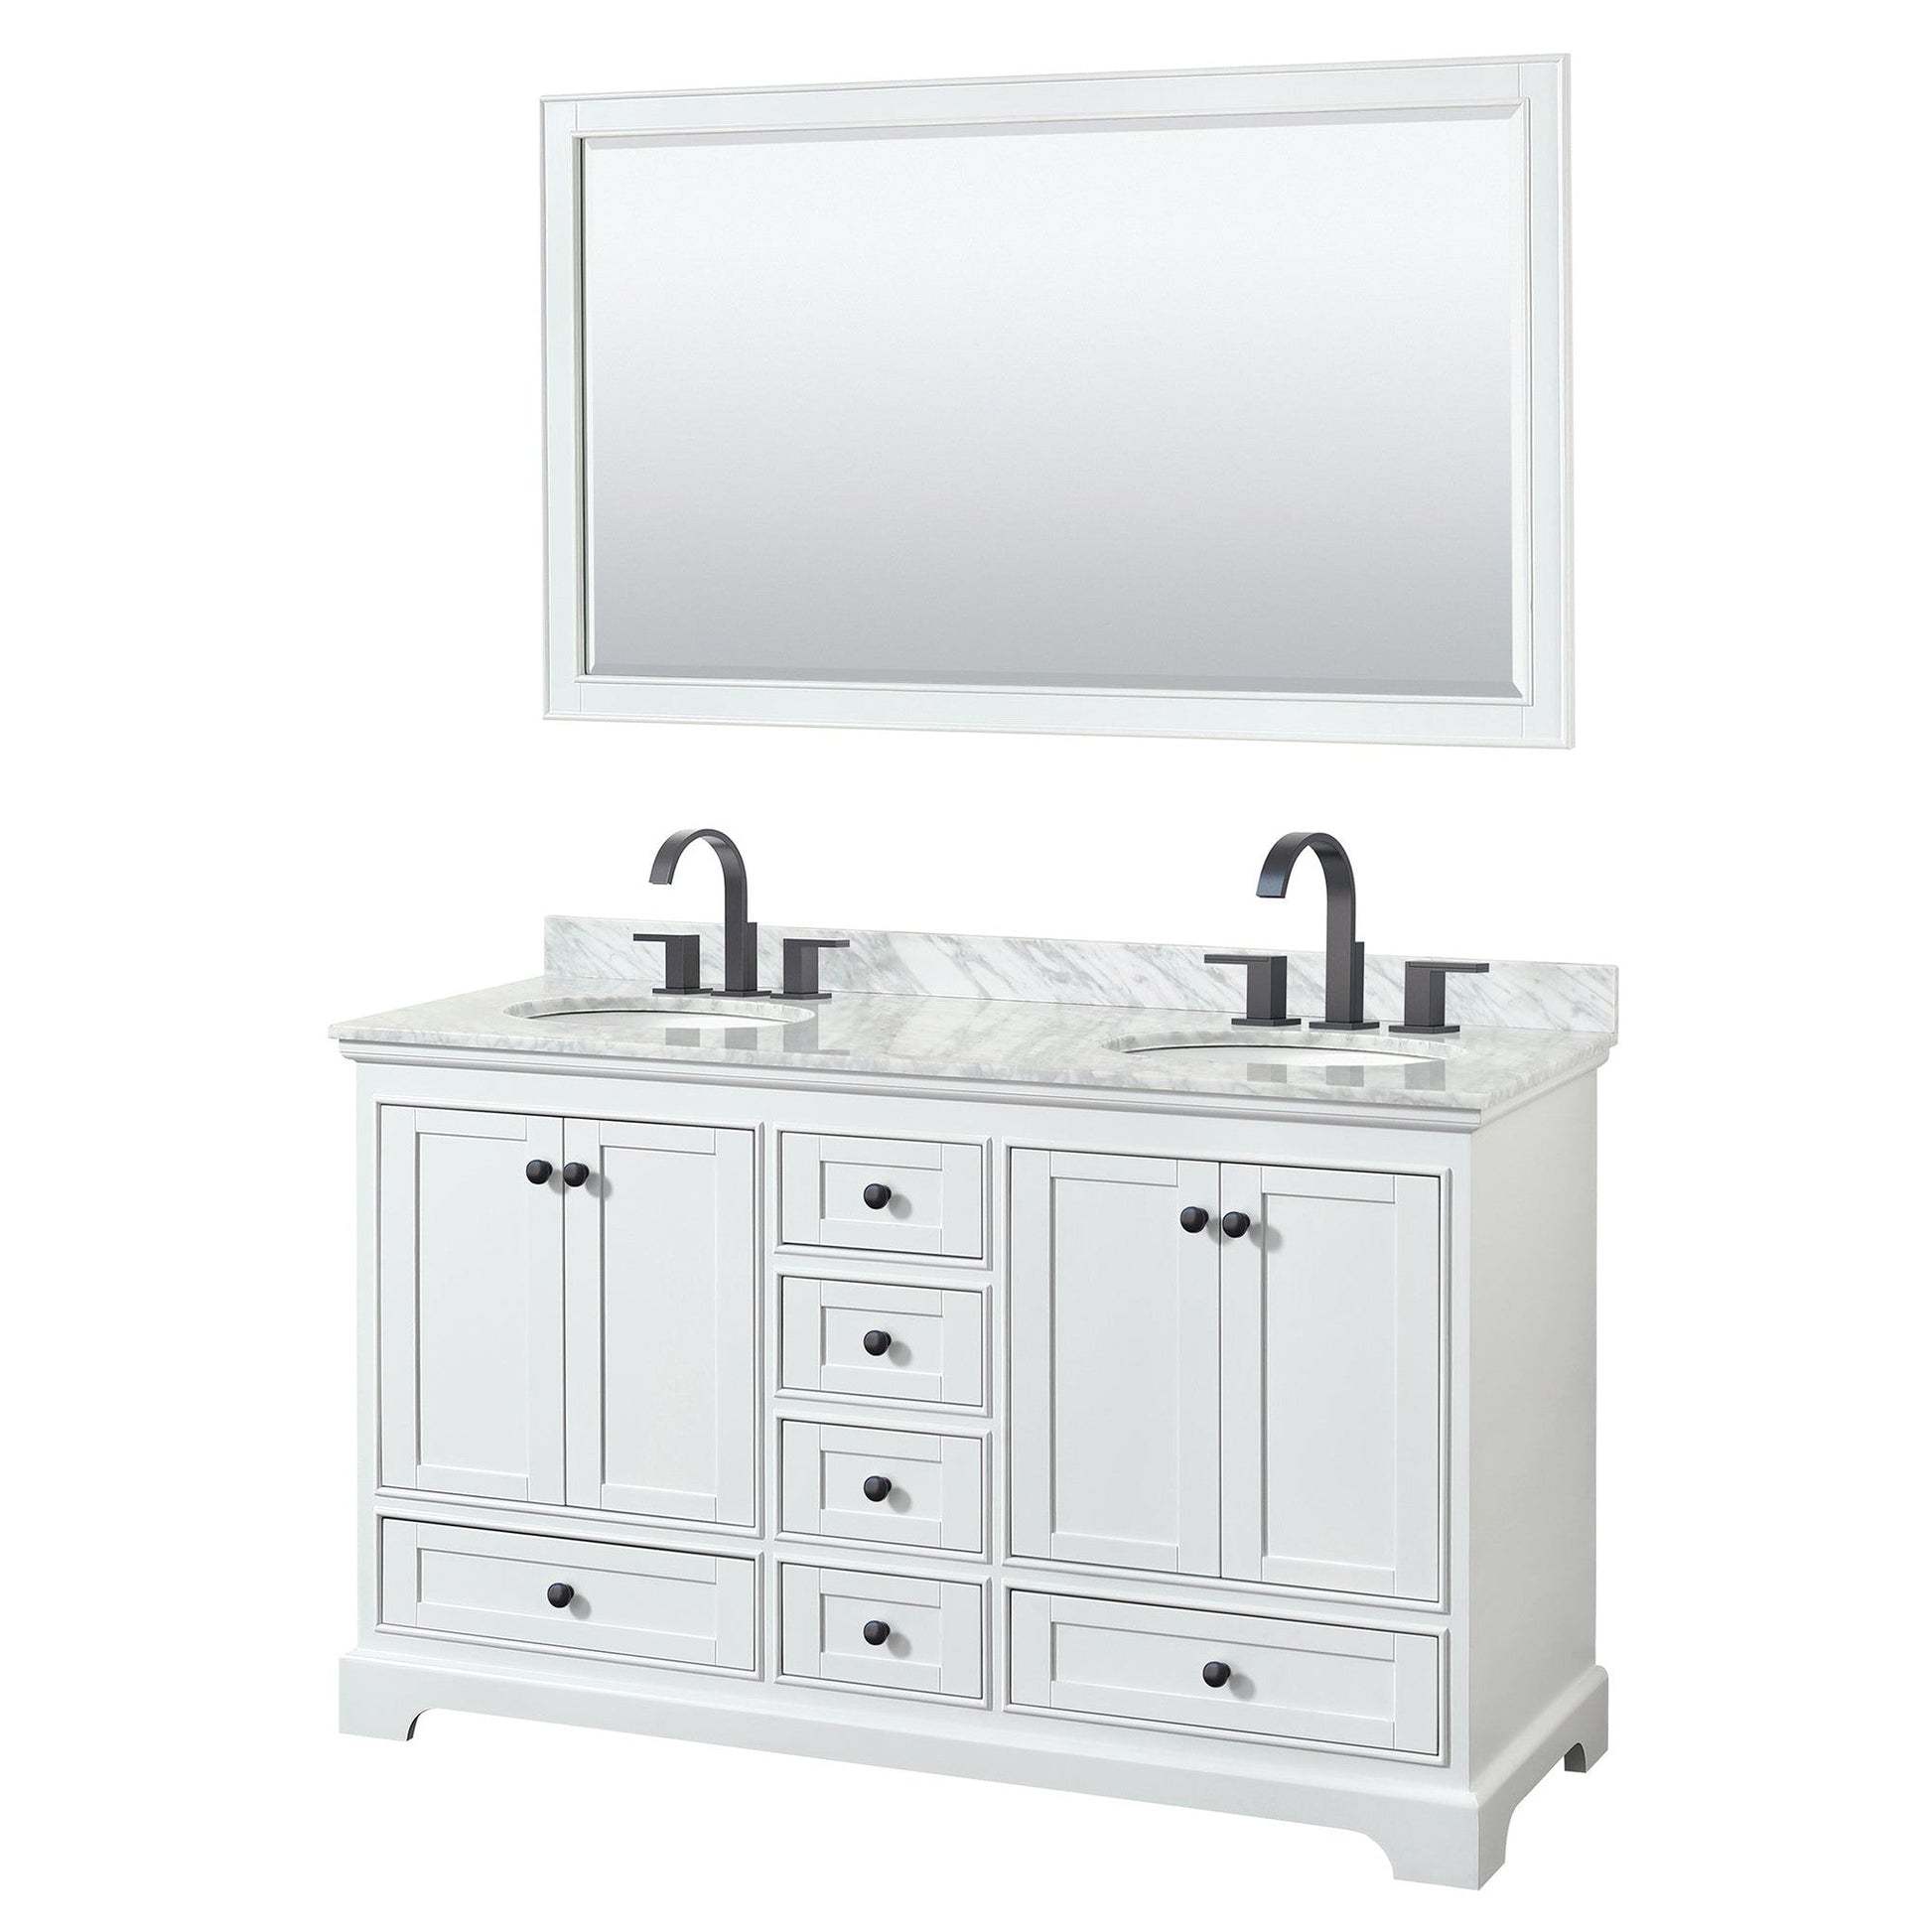 Deborah 60" Double Bathroom Vanity in White, White Carrara Marble Countertop, Undermount Oval Sinks, Matte Black Trim, 58" Mirror